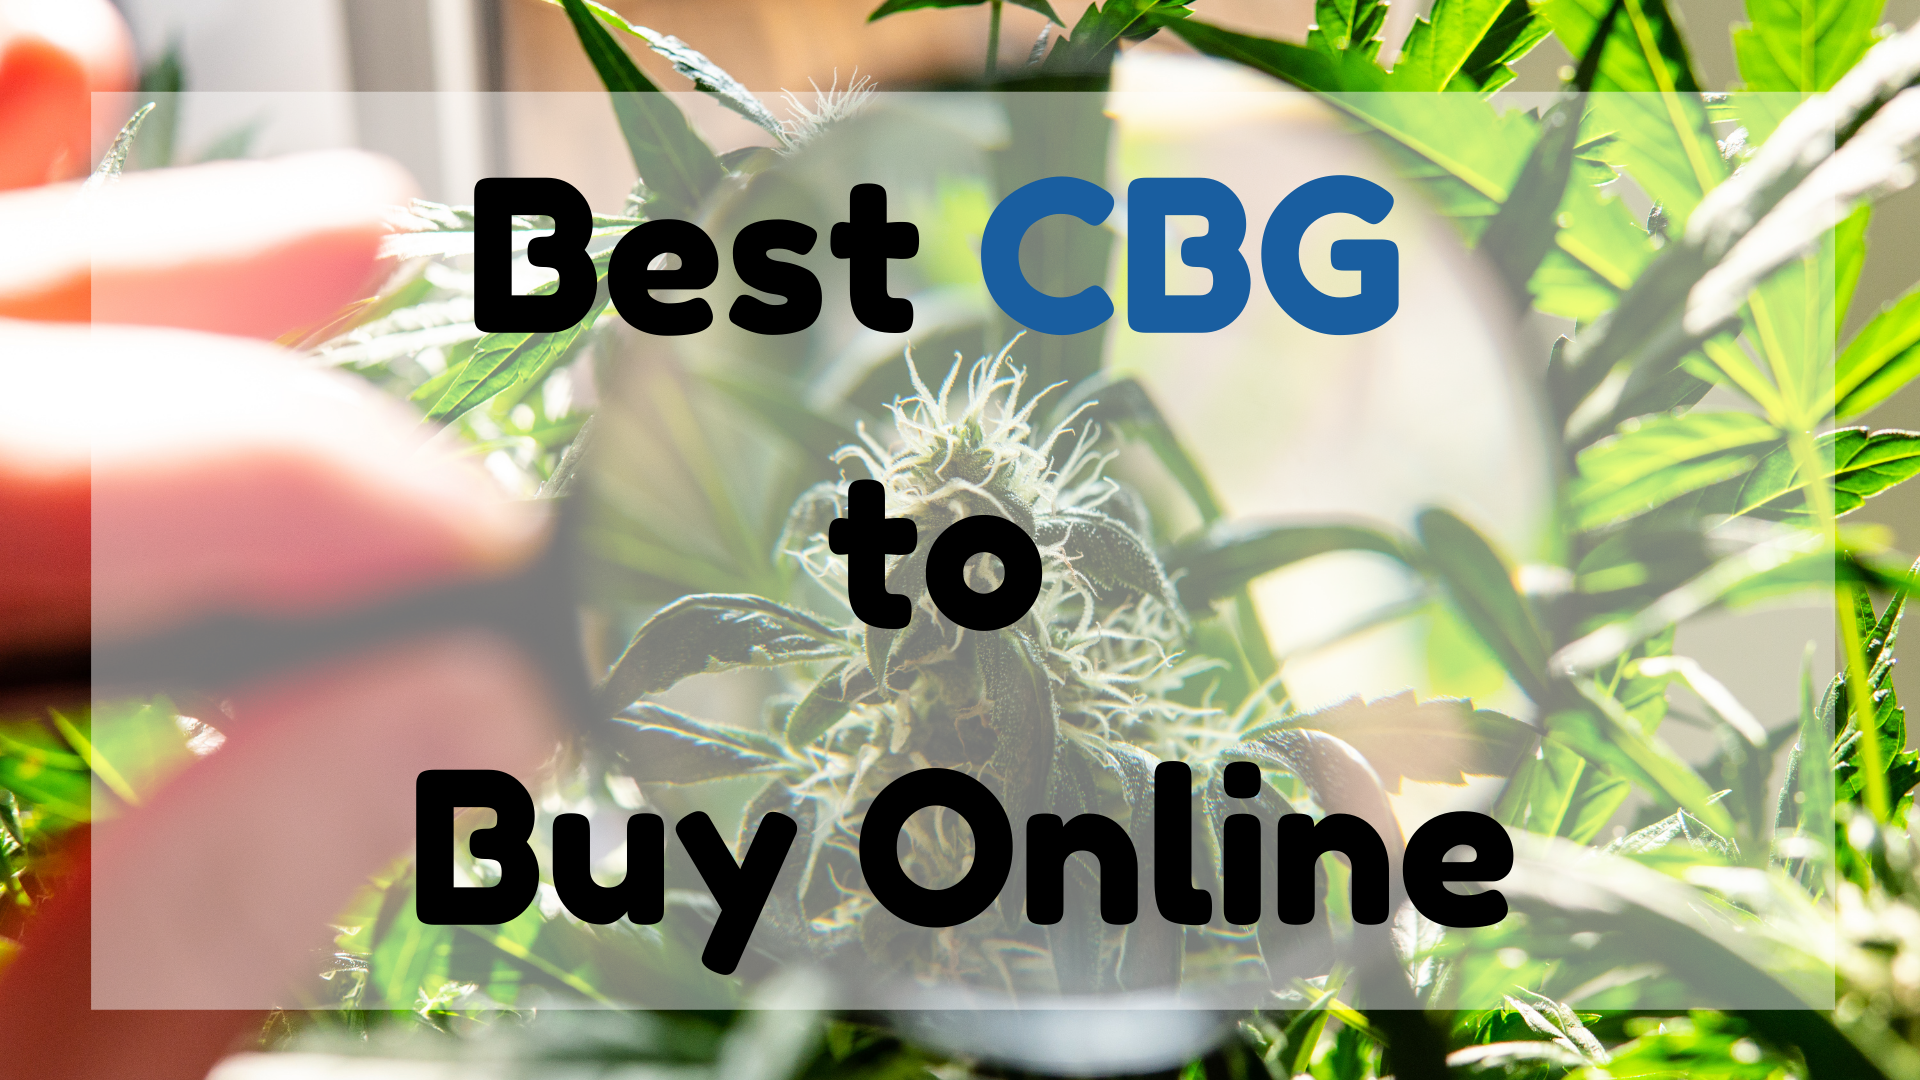 Best CBG to Buy Online